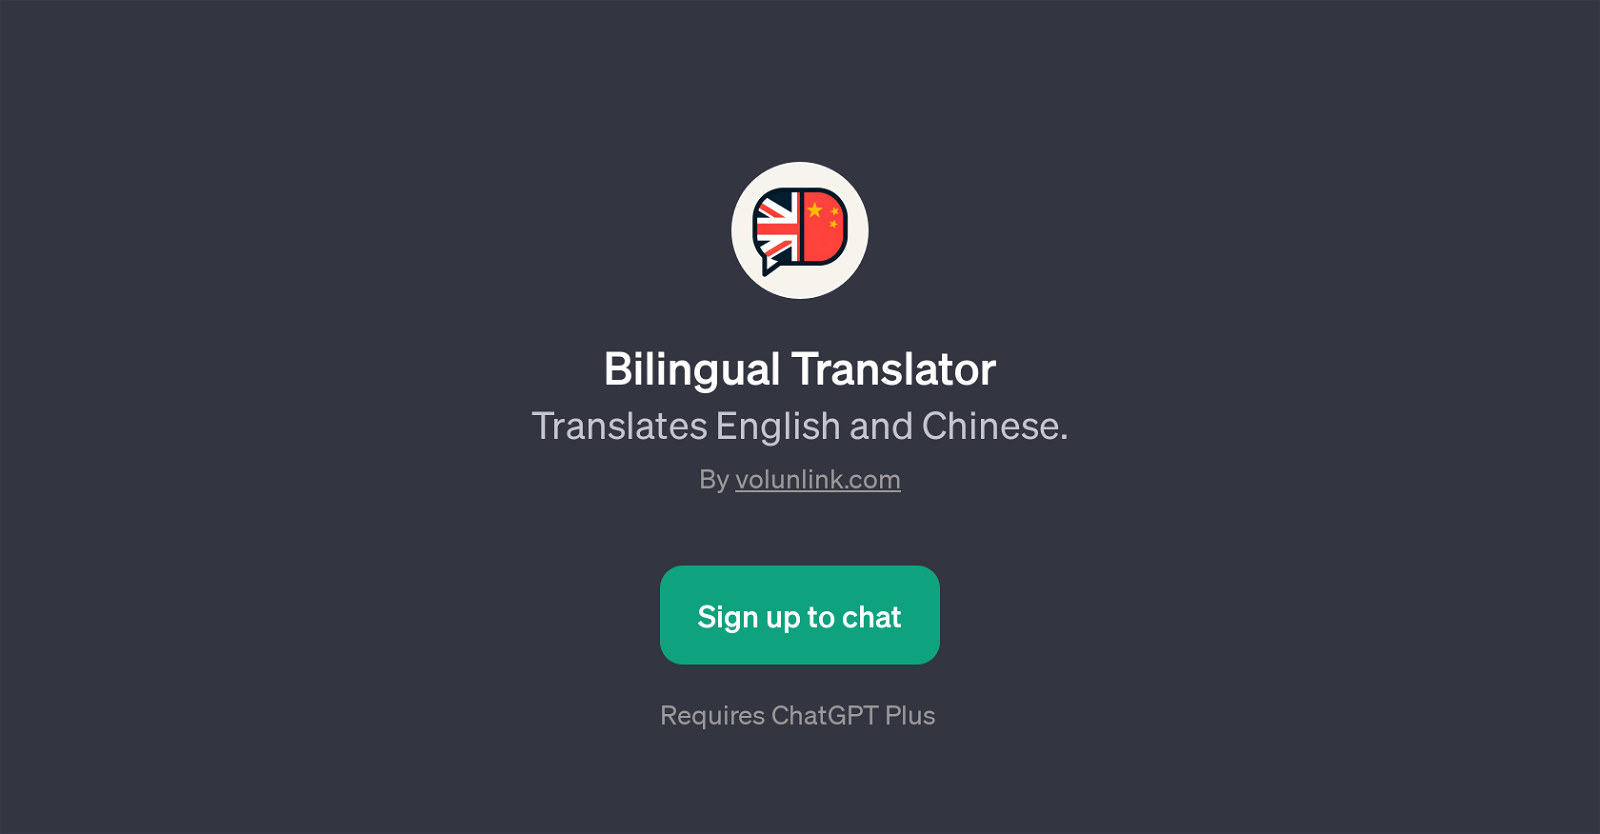 Bilingual Translator website